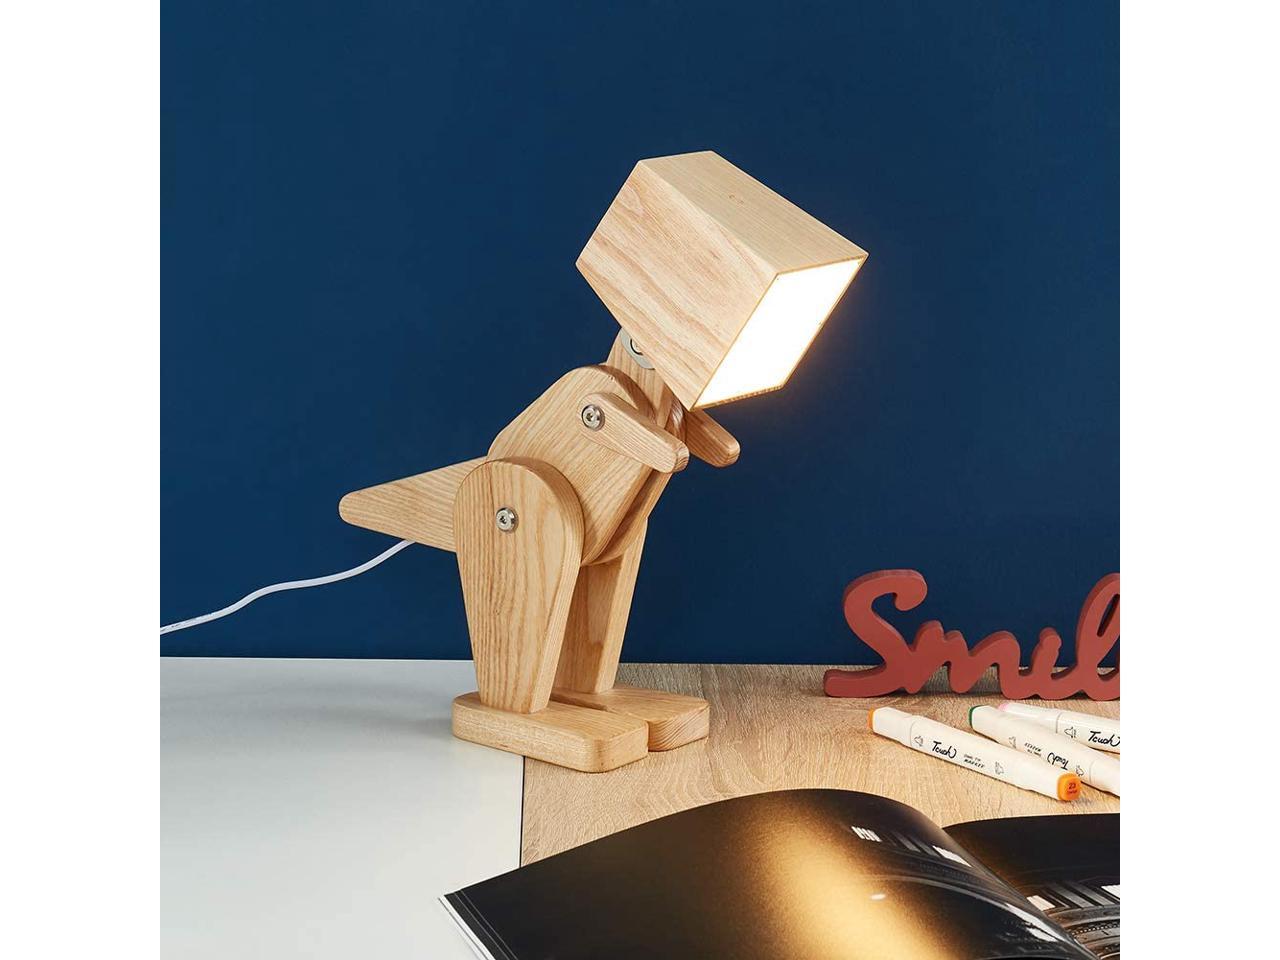 Handmade Dinosaur Study Lamp